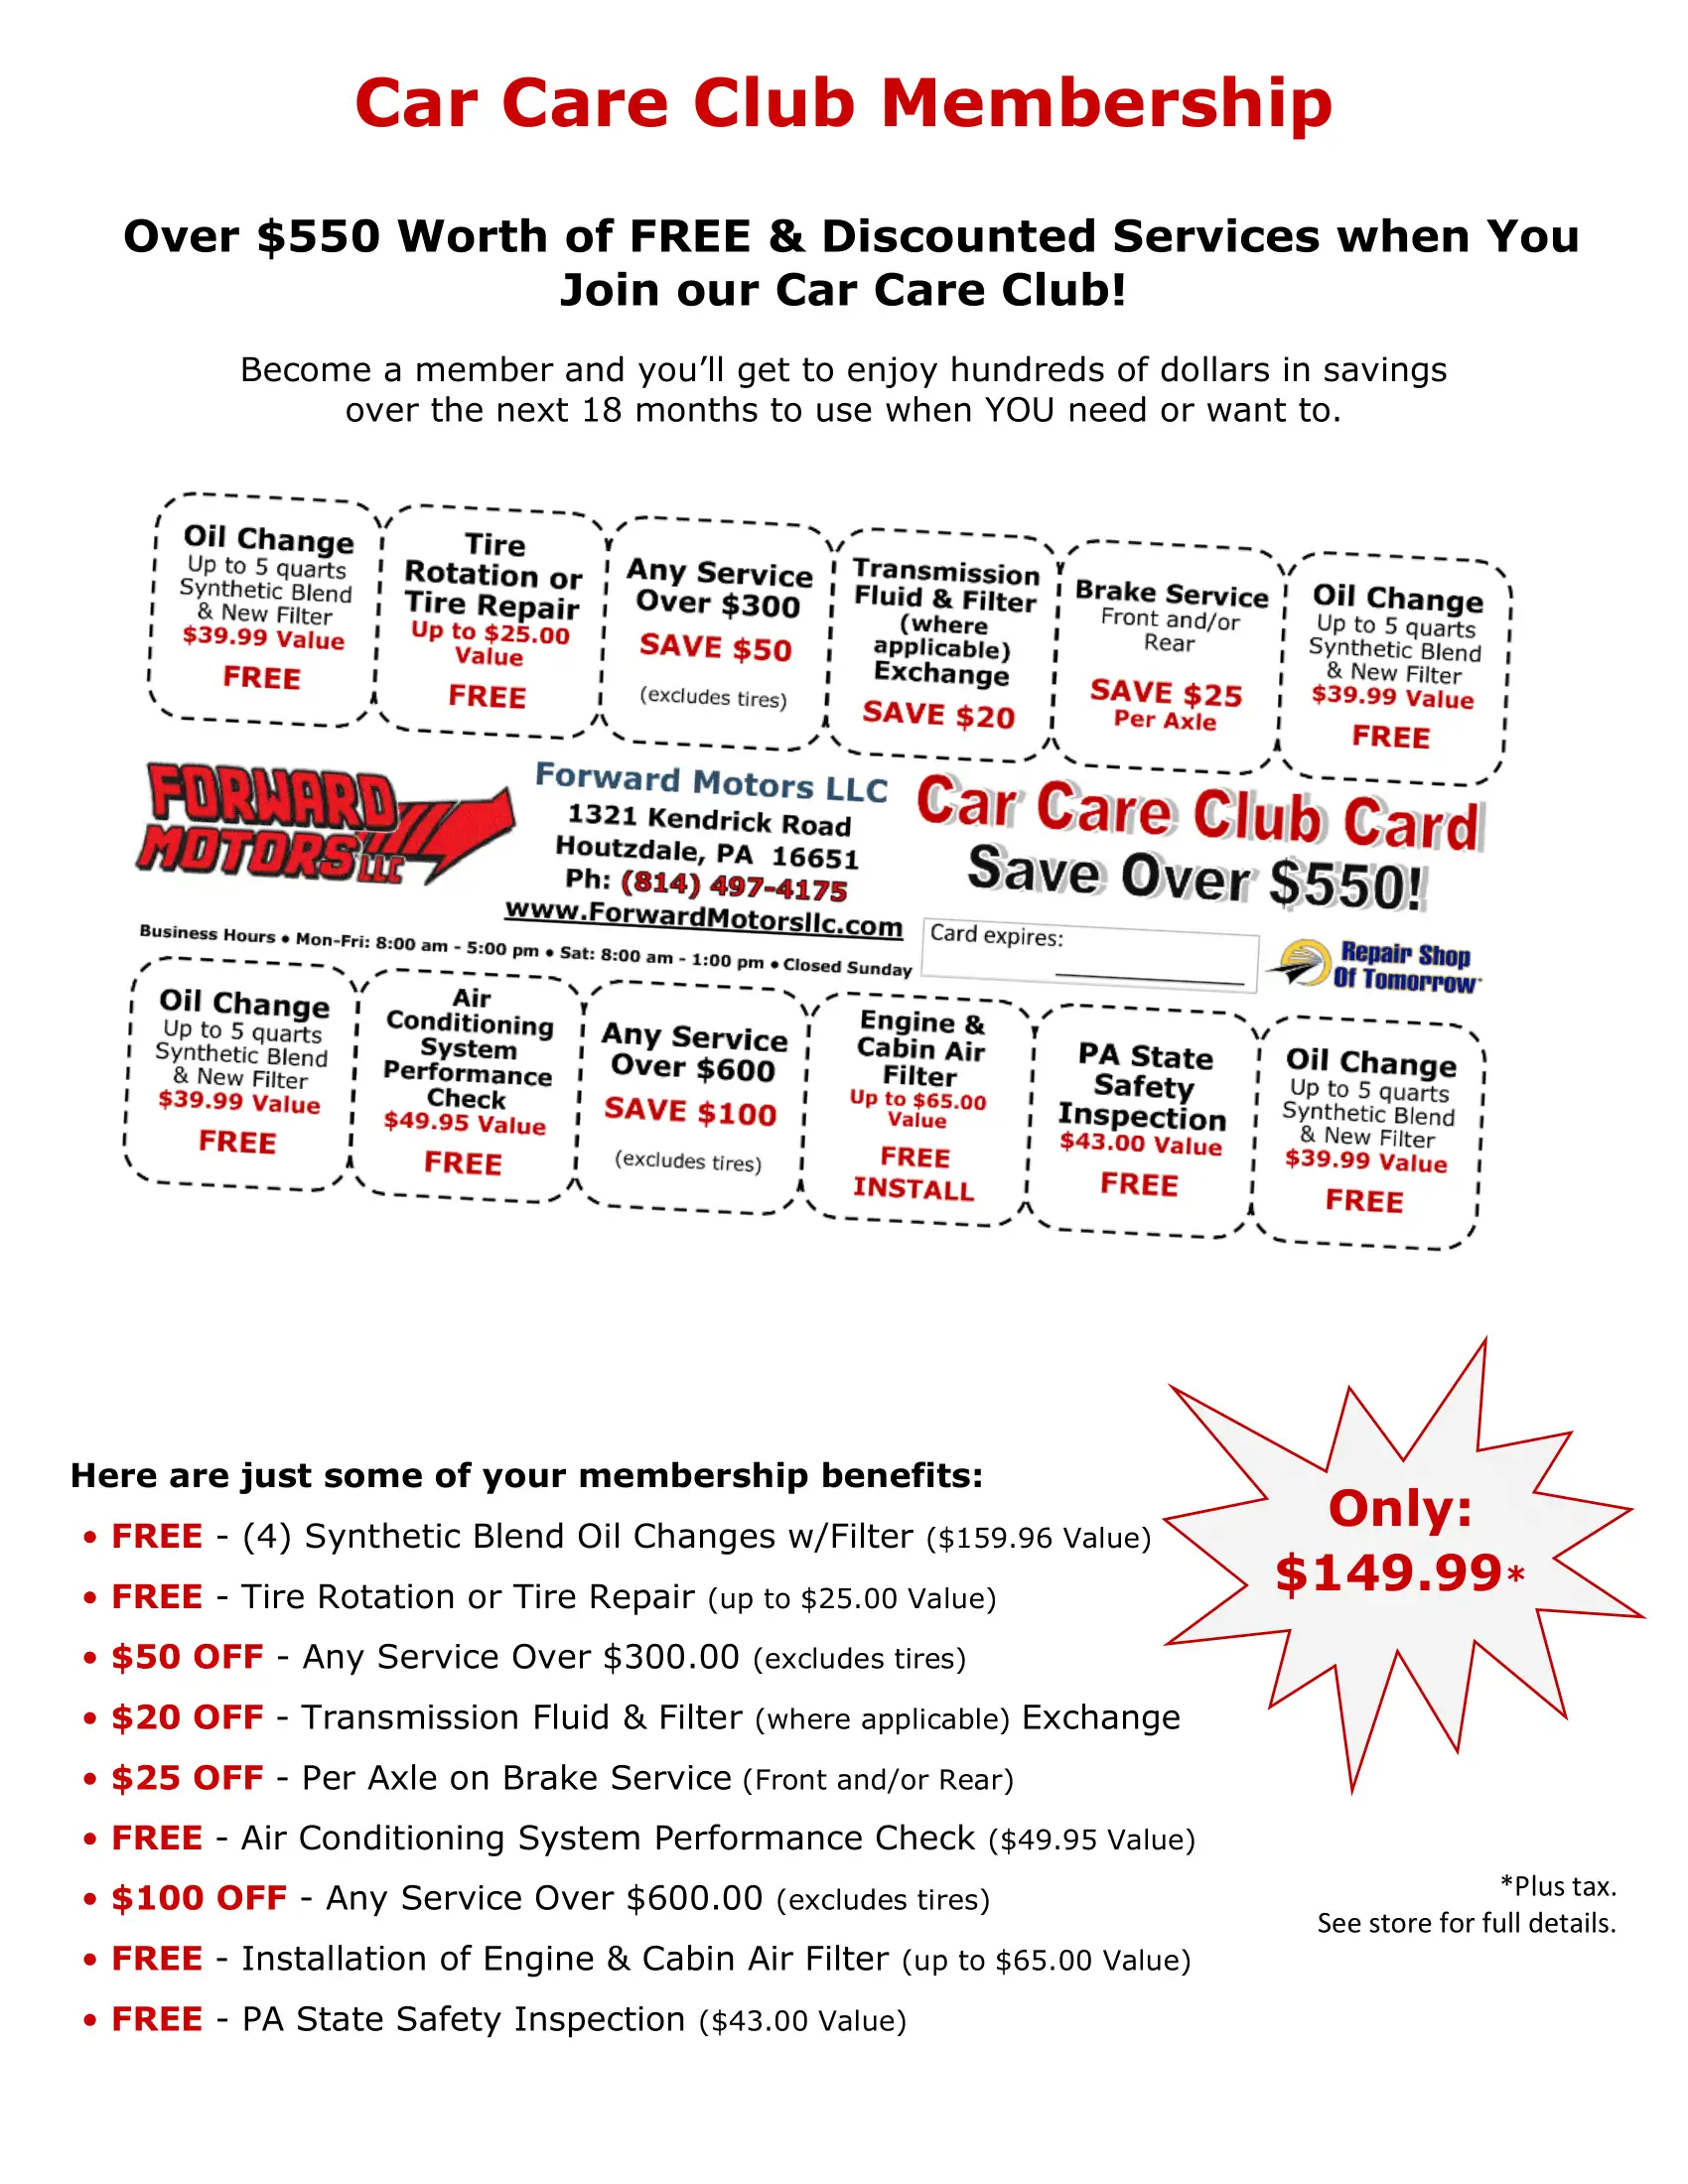 Car Care Club 